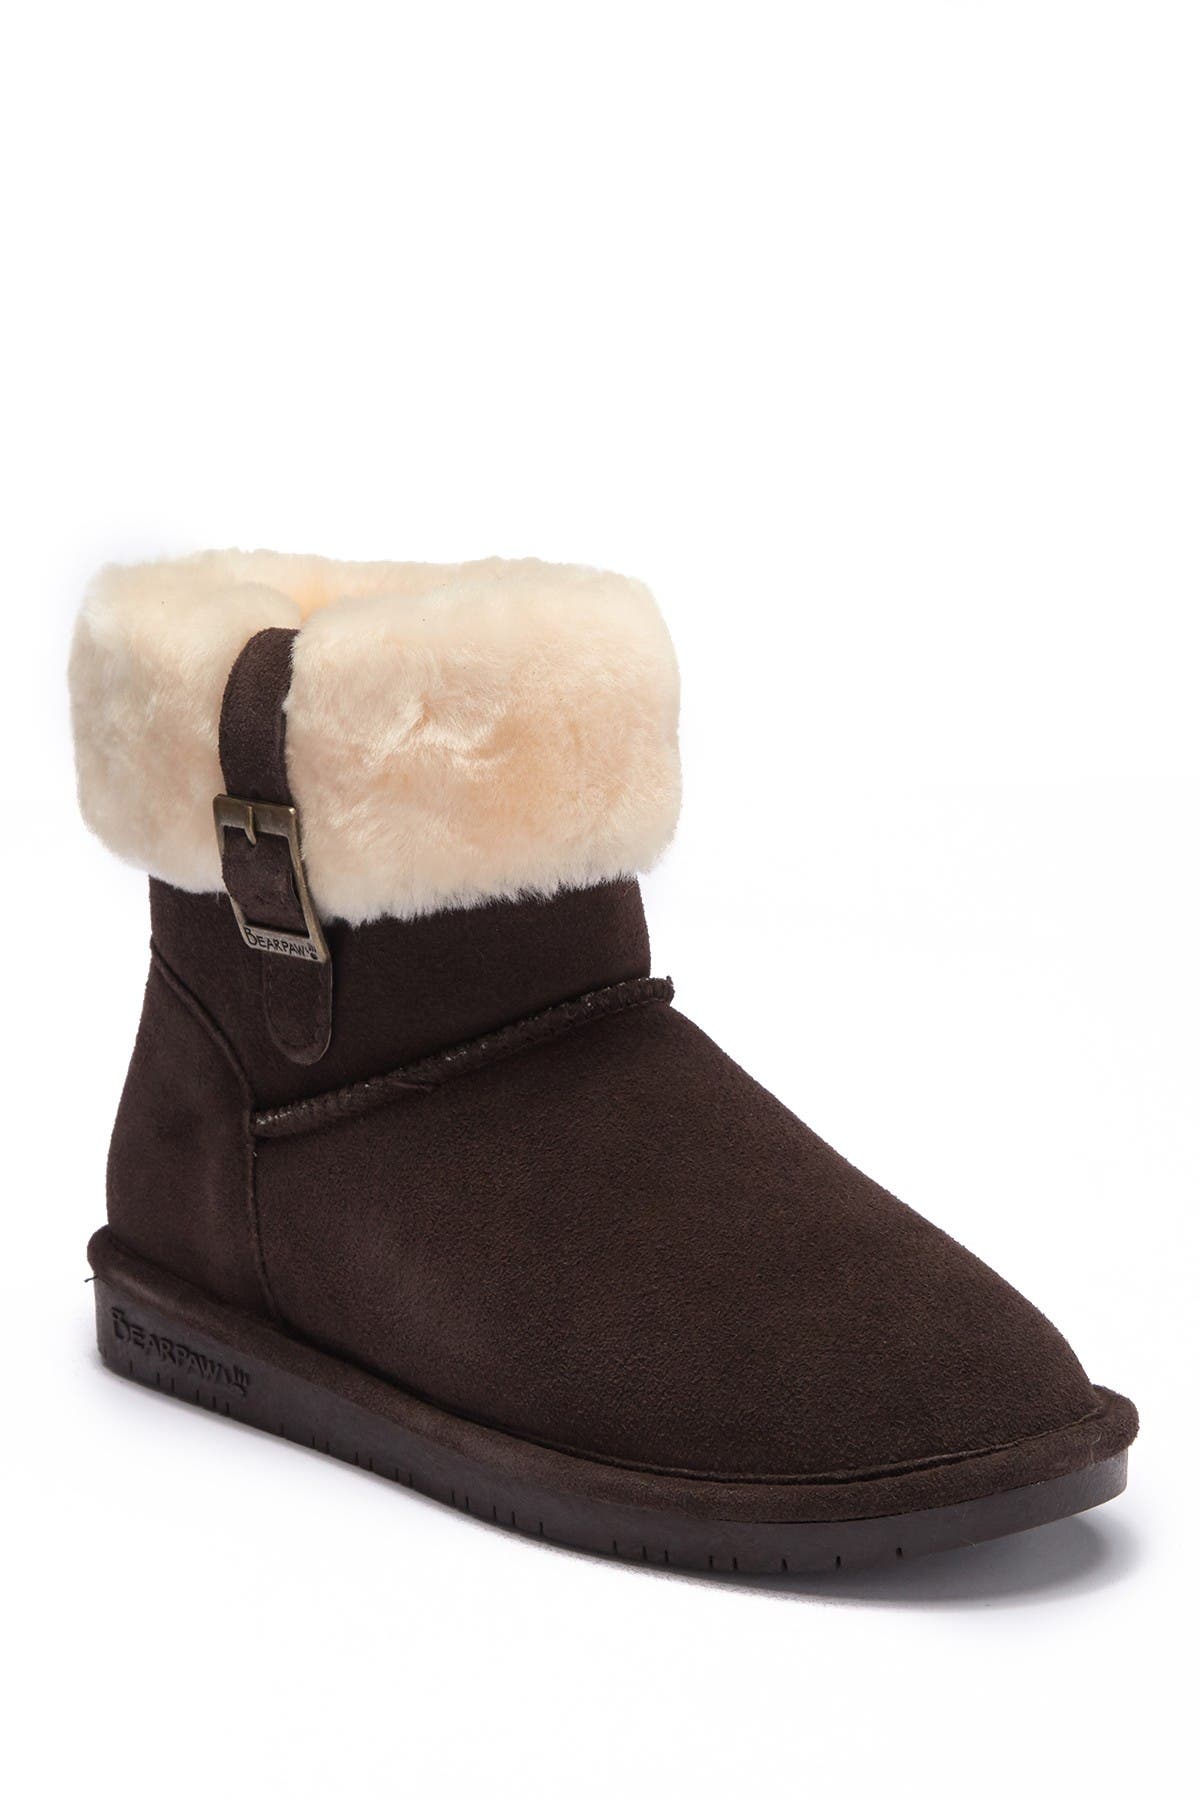 bearpaw abby genuine sheepskin lined boot